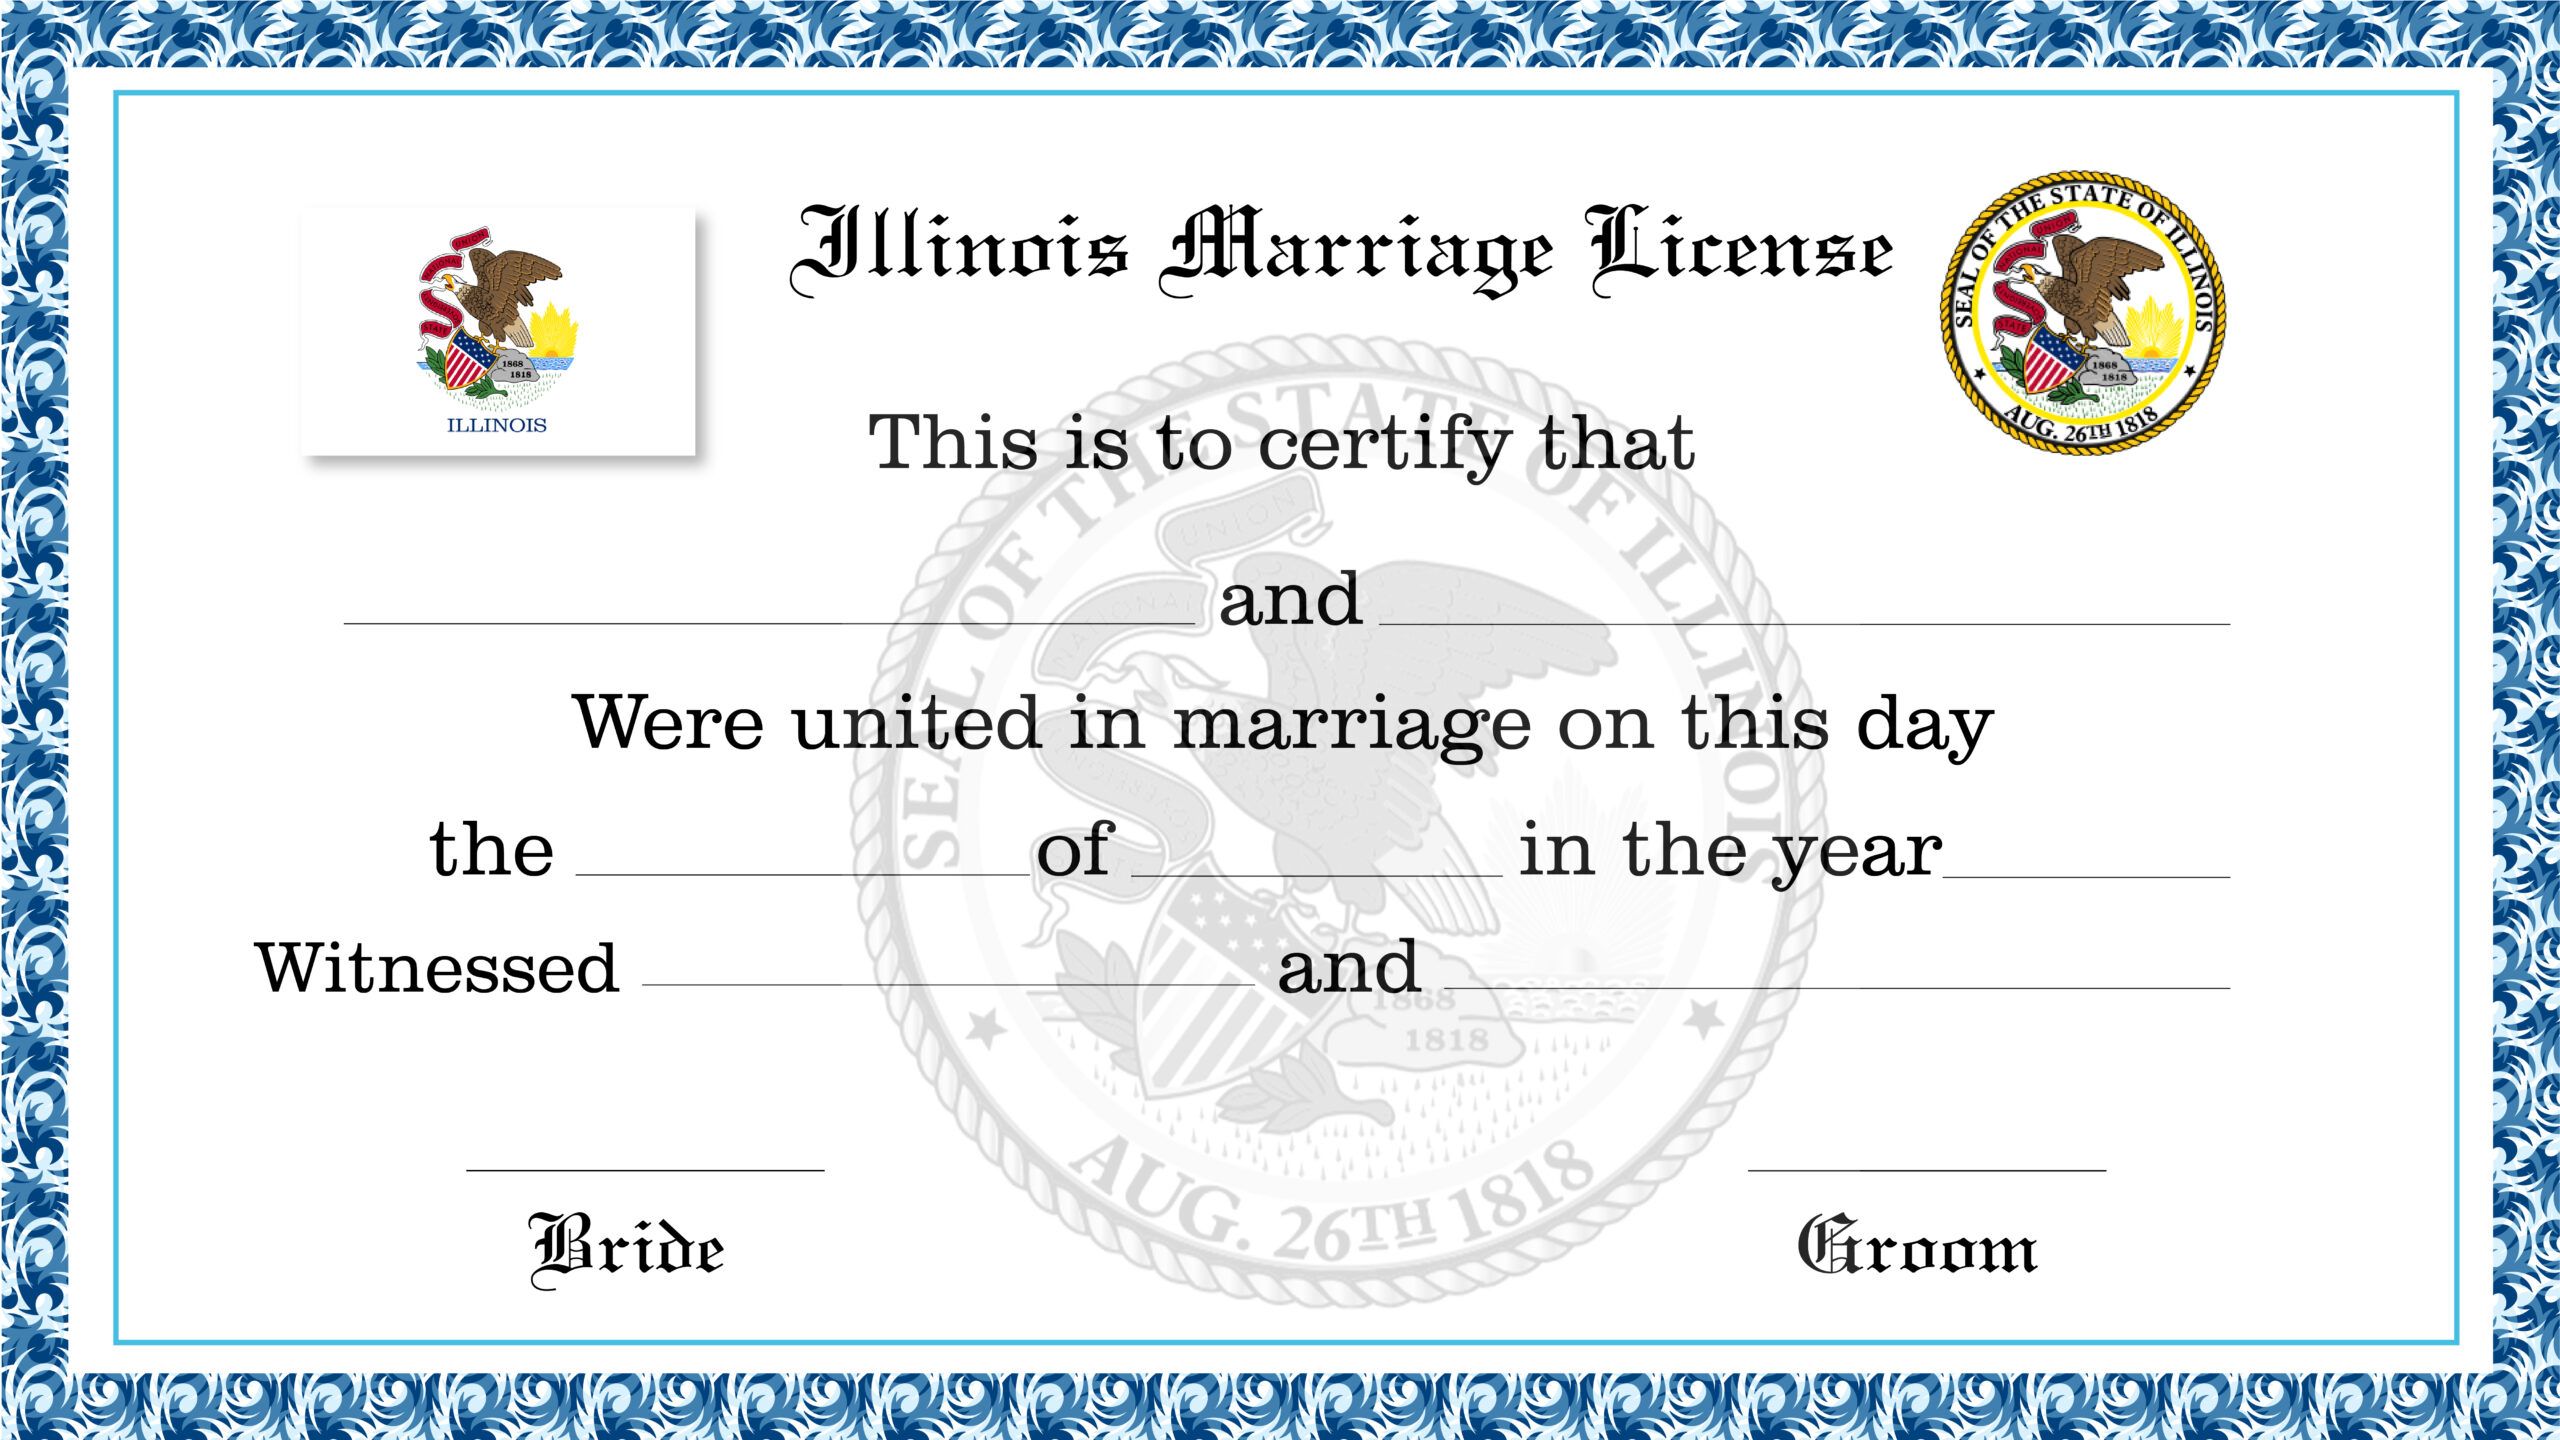 susan monica langston marriage certificate